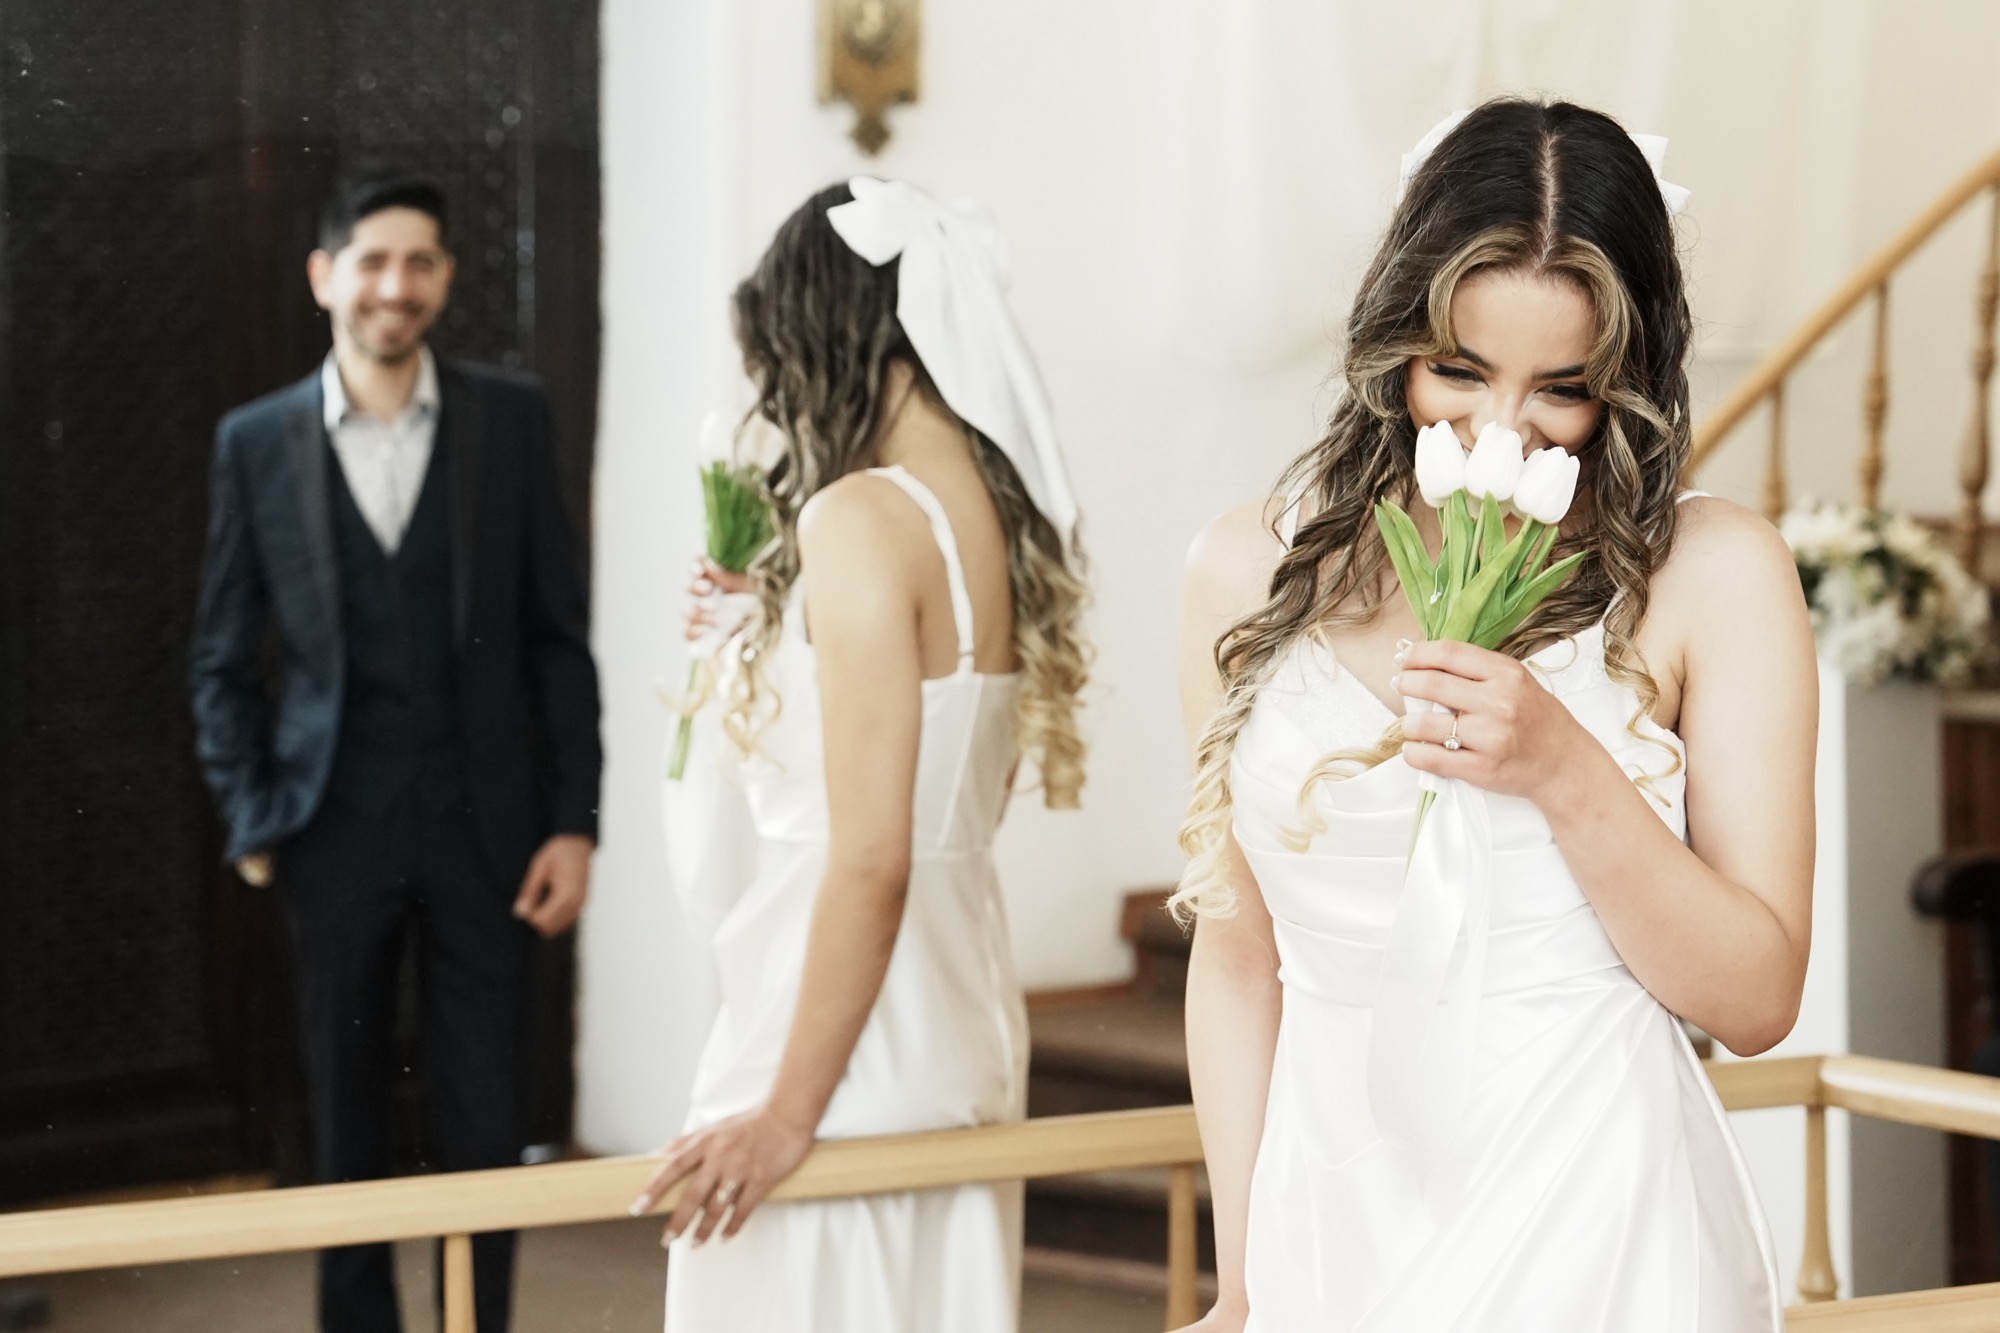 Elaheh and Mohammad's wedding photos in Tbilisi Georgia